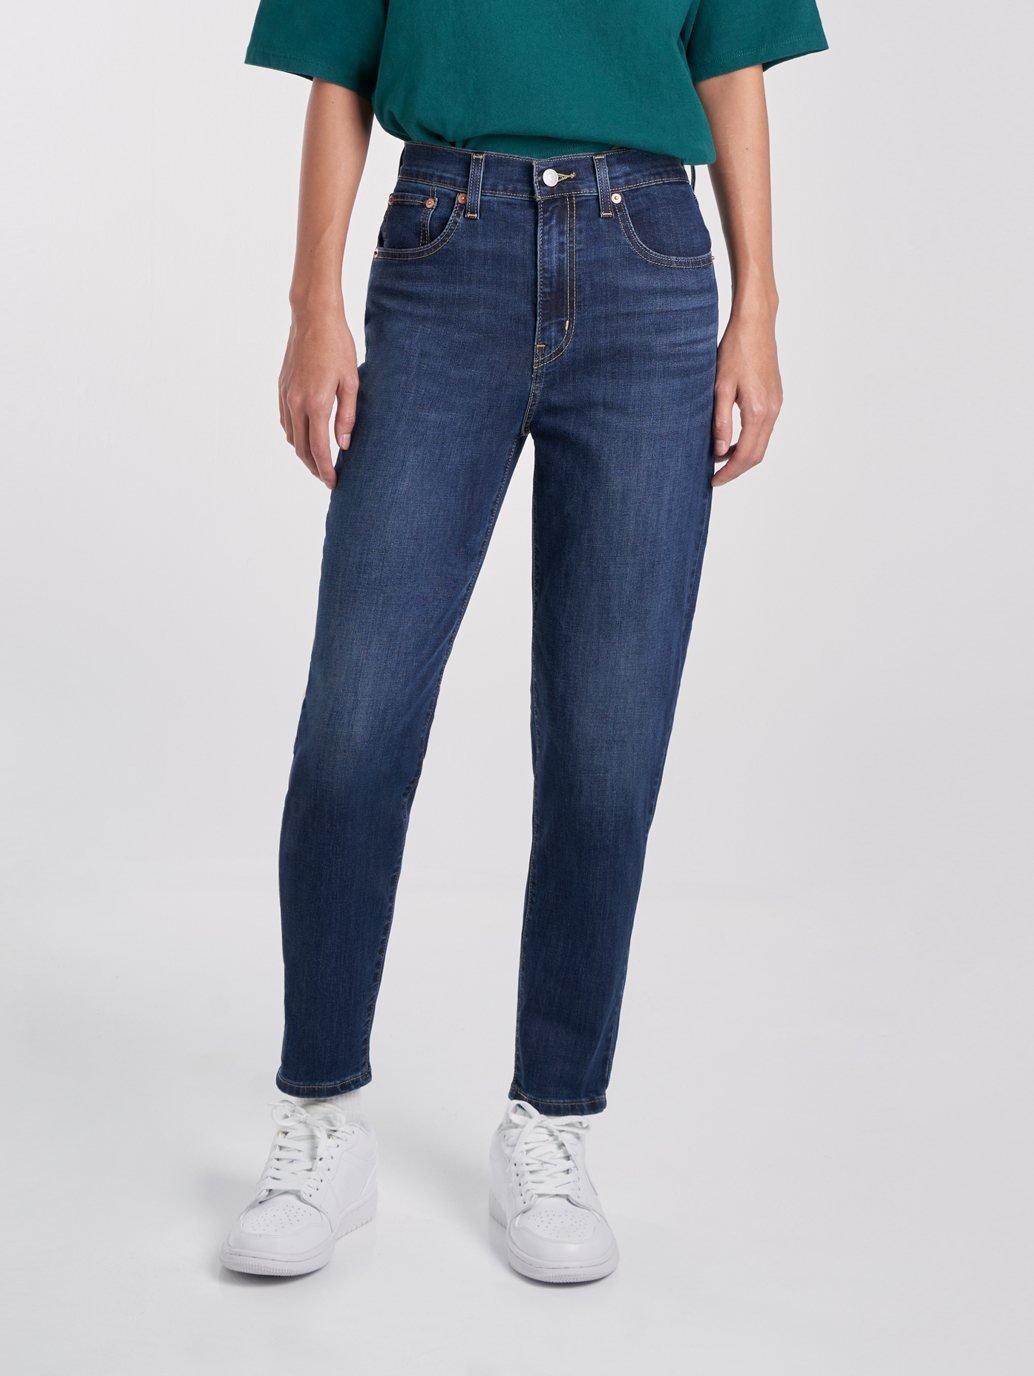 Buy Levi’s® Women's High-Waisted Boyfriend Jeans | Levi’s® Official ...